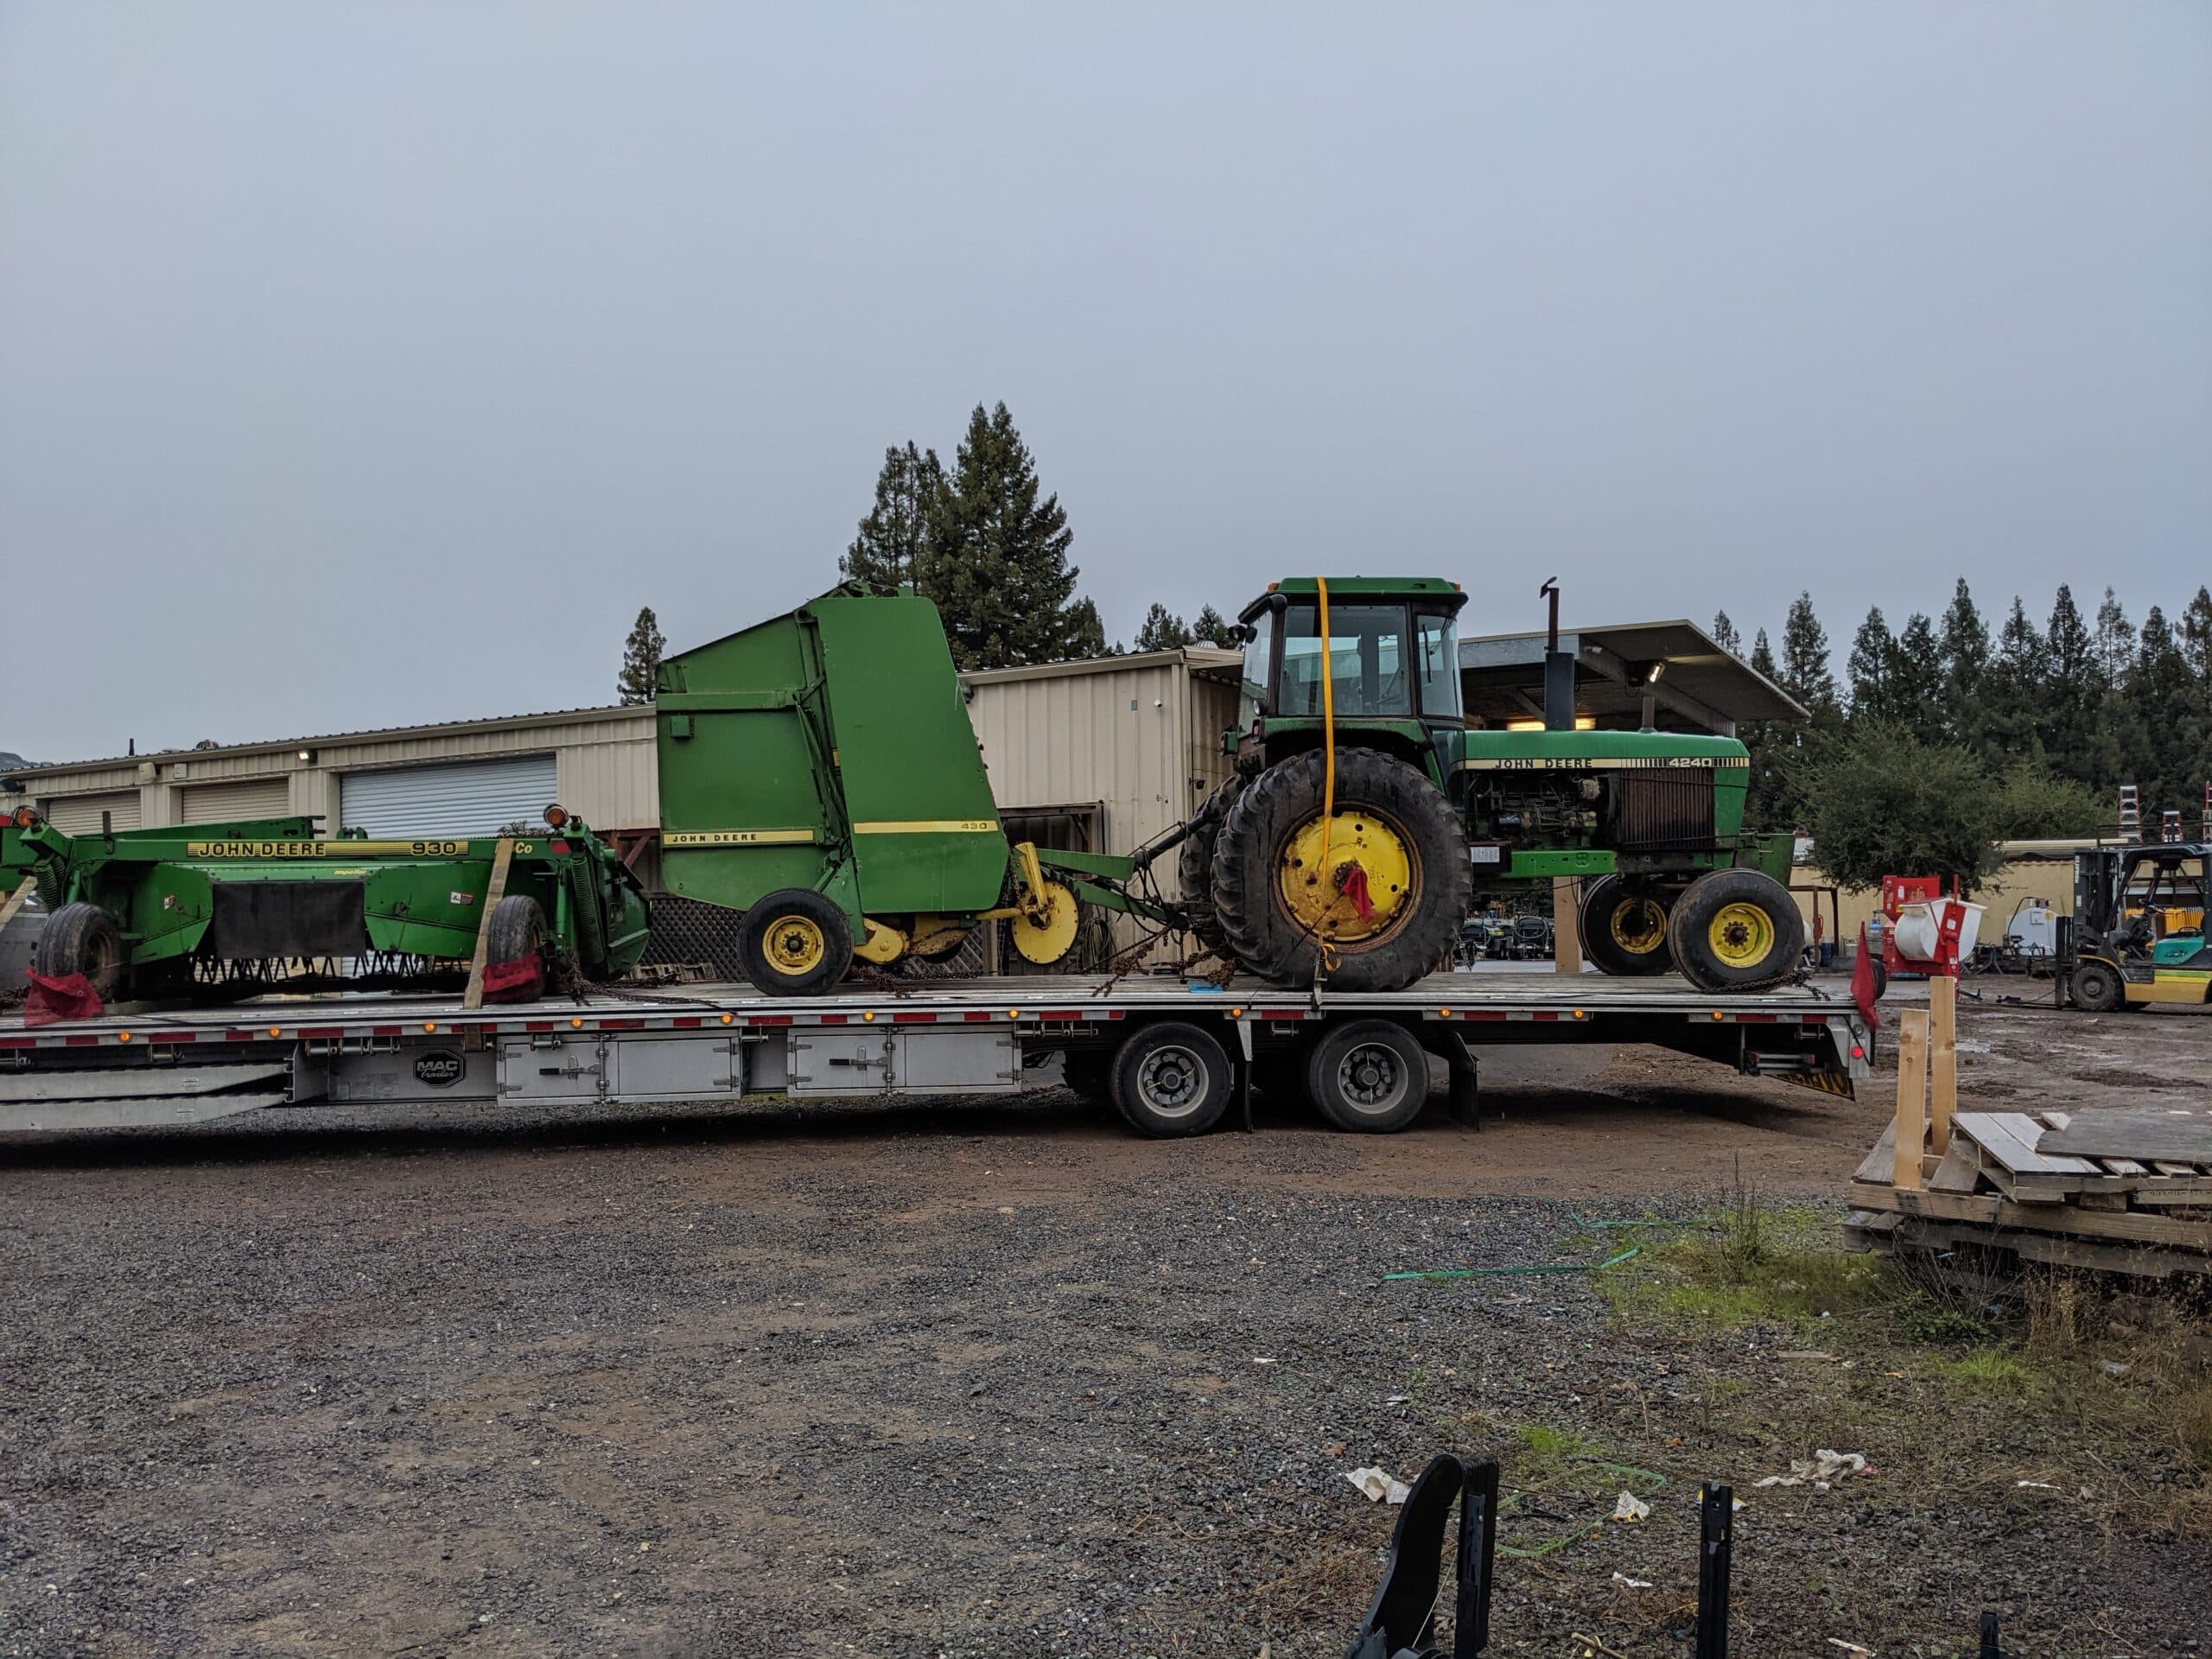 Shipping John Deere Farm equipment in bulk